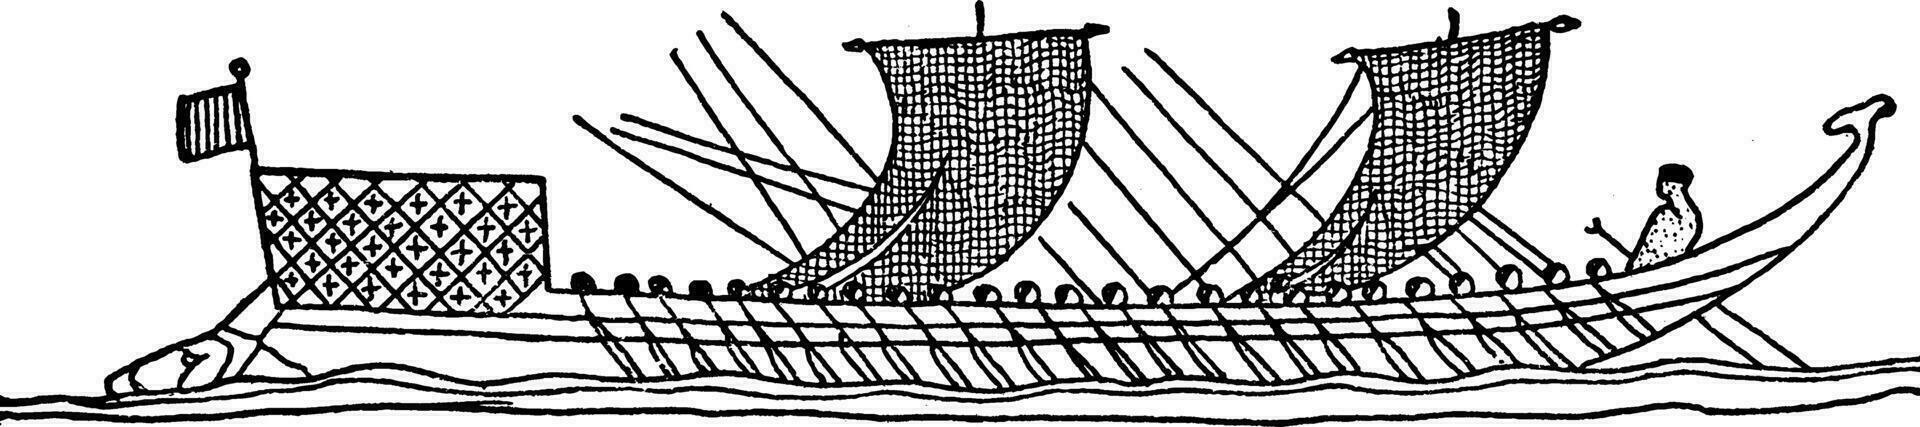 Fifty Oared Greek Boat, vintage illustration. vector